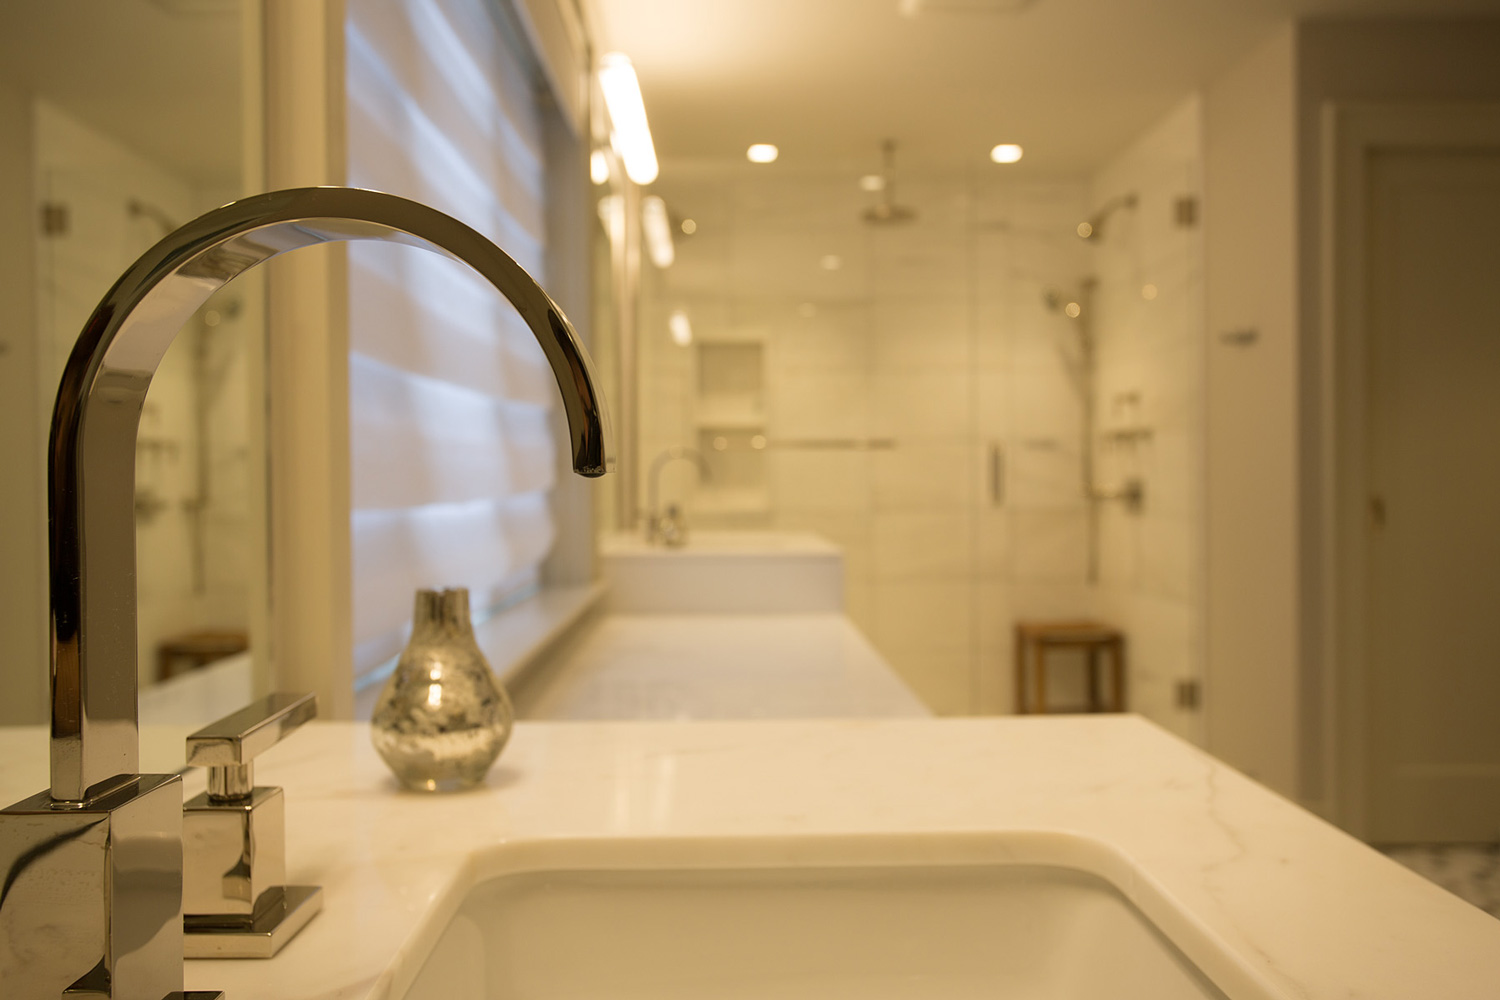 Roslyn bathroom vanity designed by Annette Jaffe Interiors